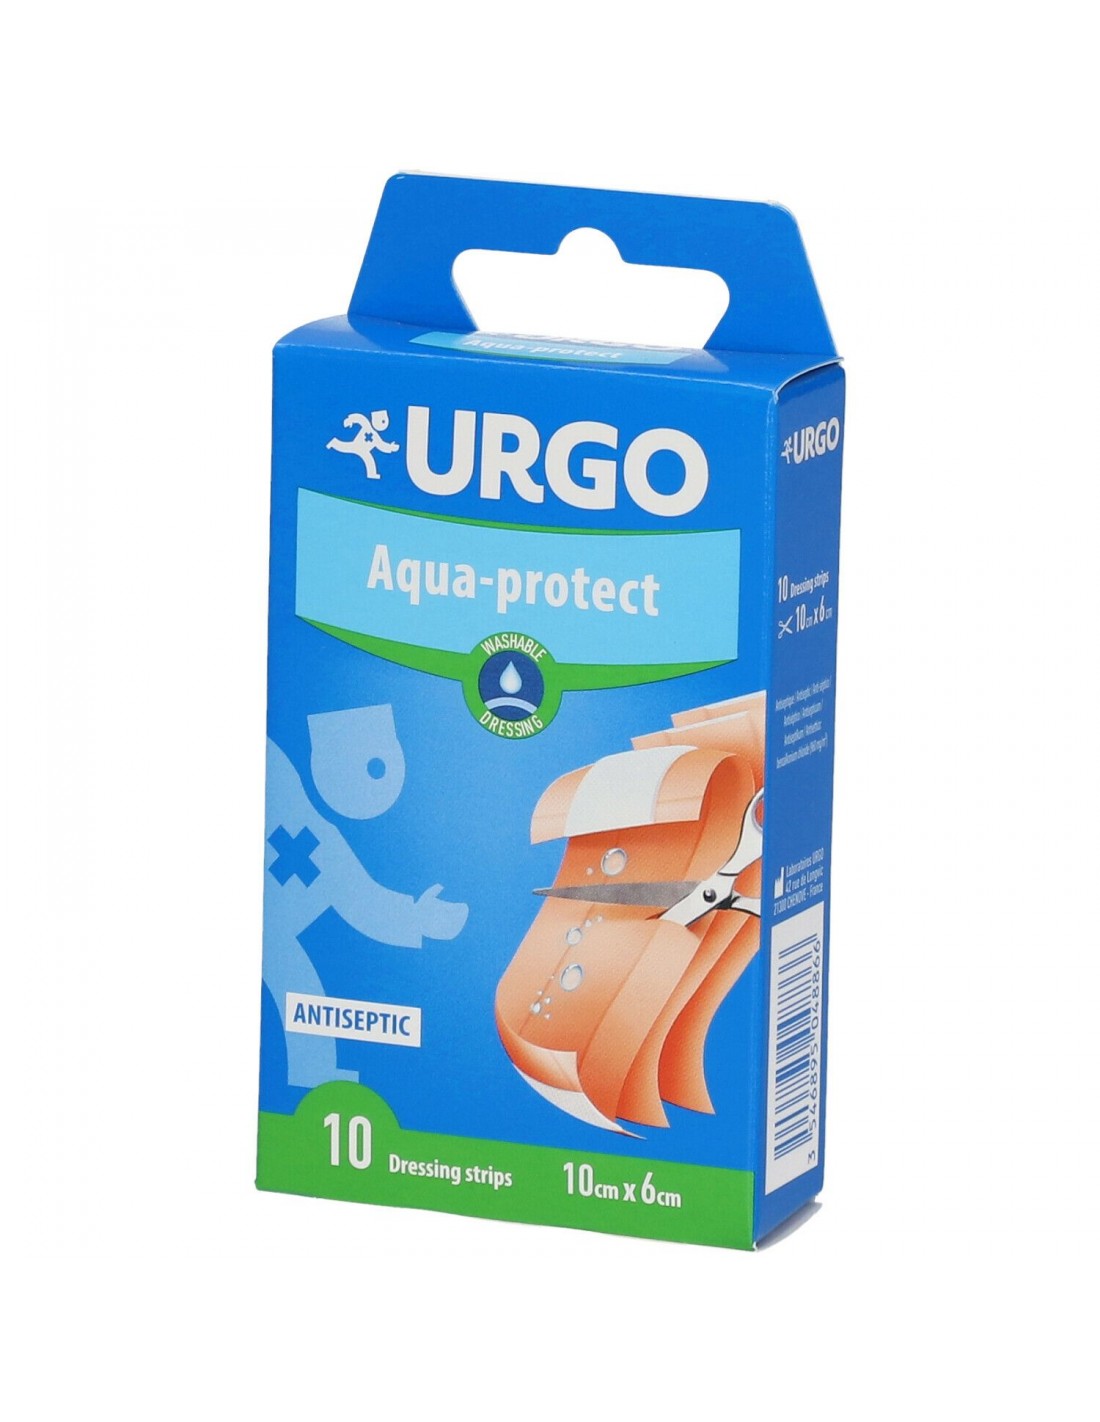 URGO AQUA PROTECT 10CM*6CM B10